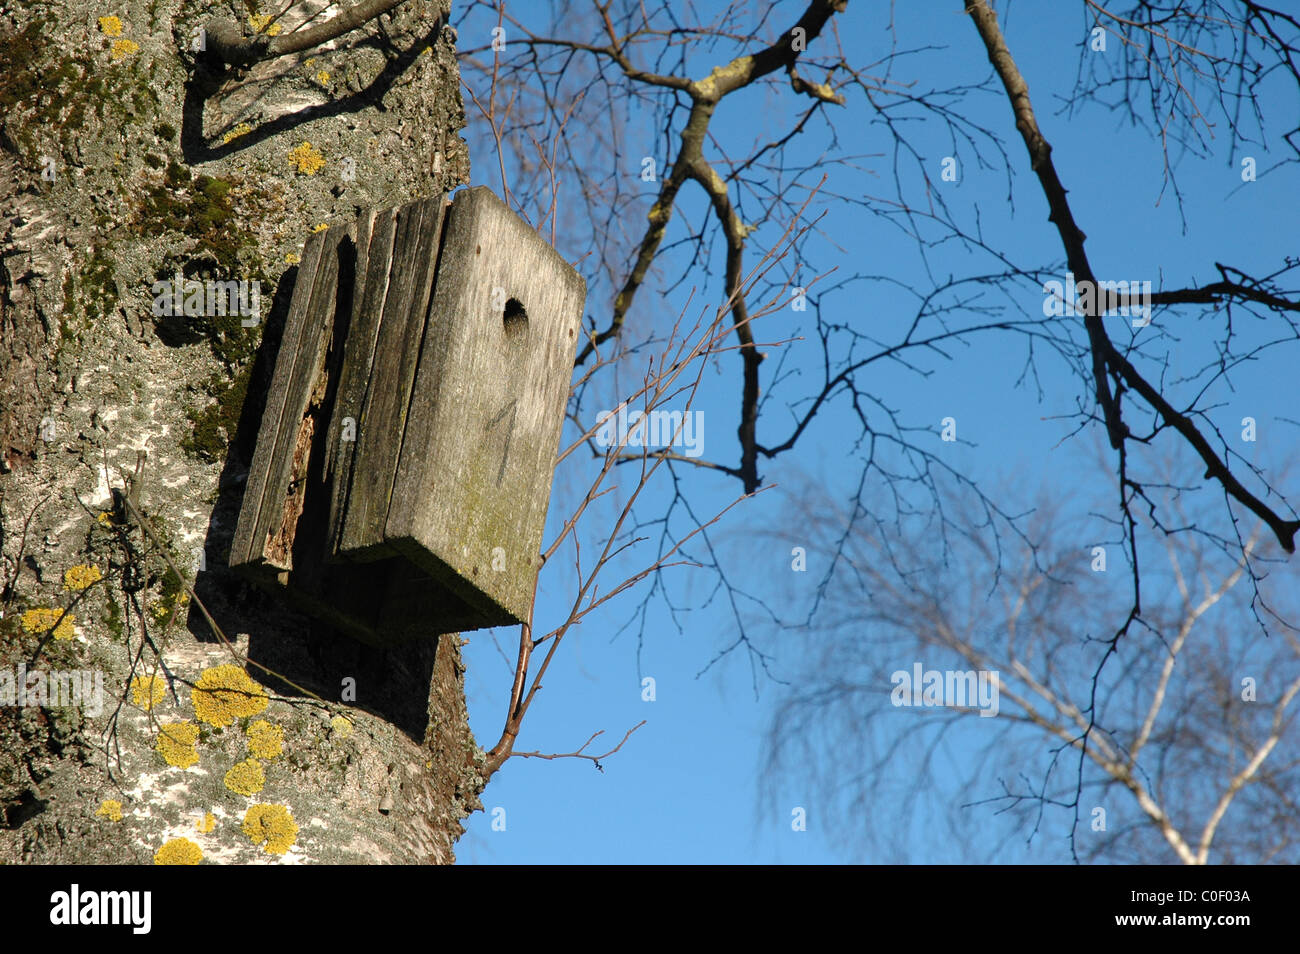 empty birdhouse on wooden background Stock Photo